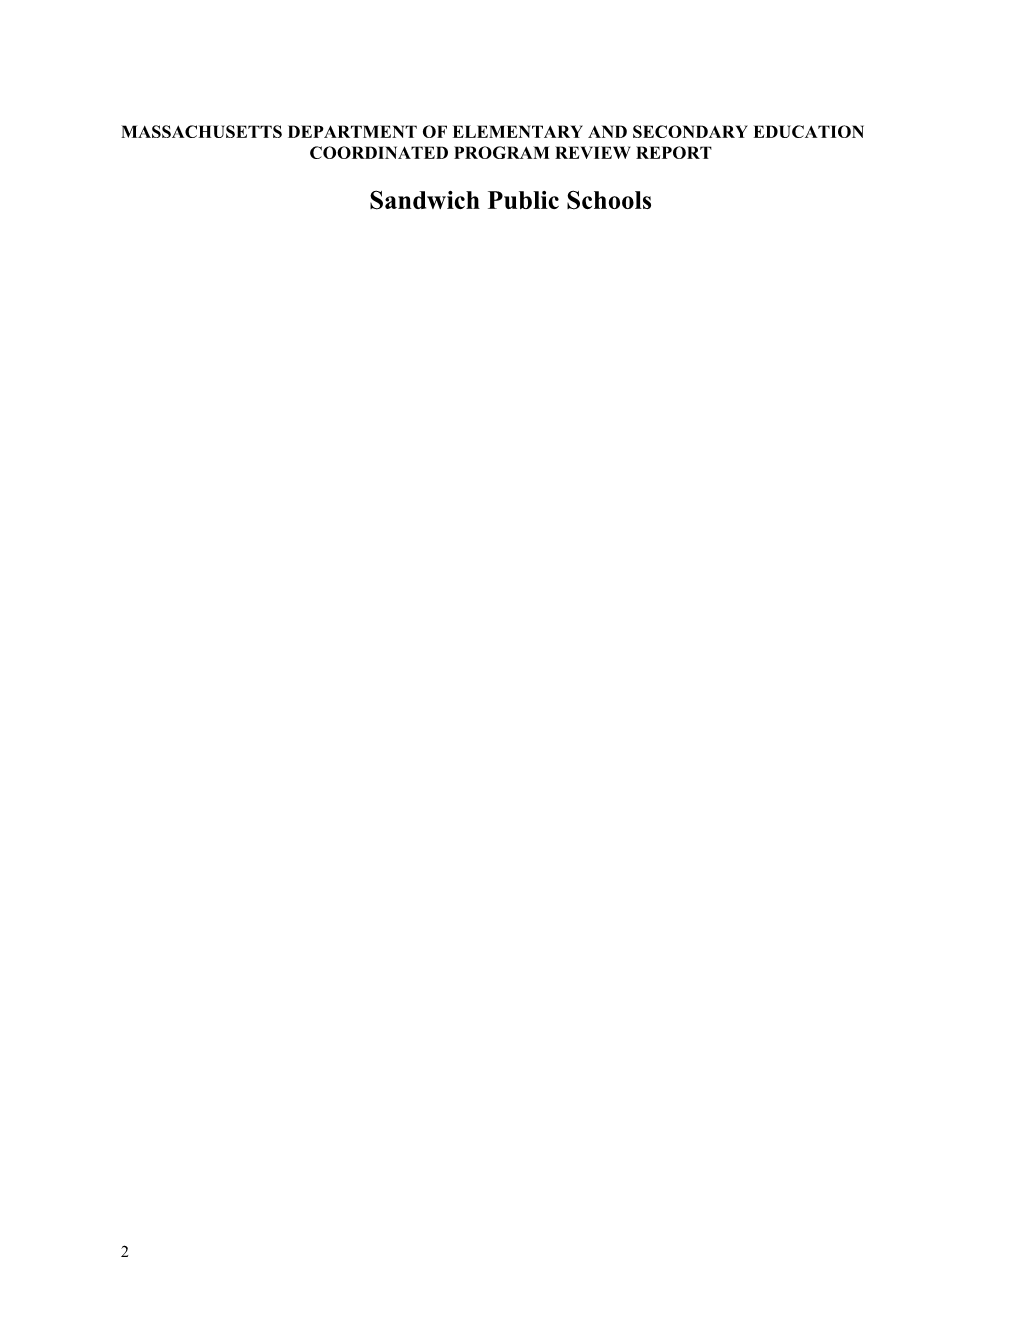 Sandwich CPR Final Report 2012-2013